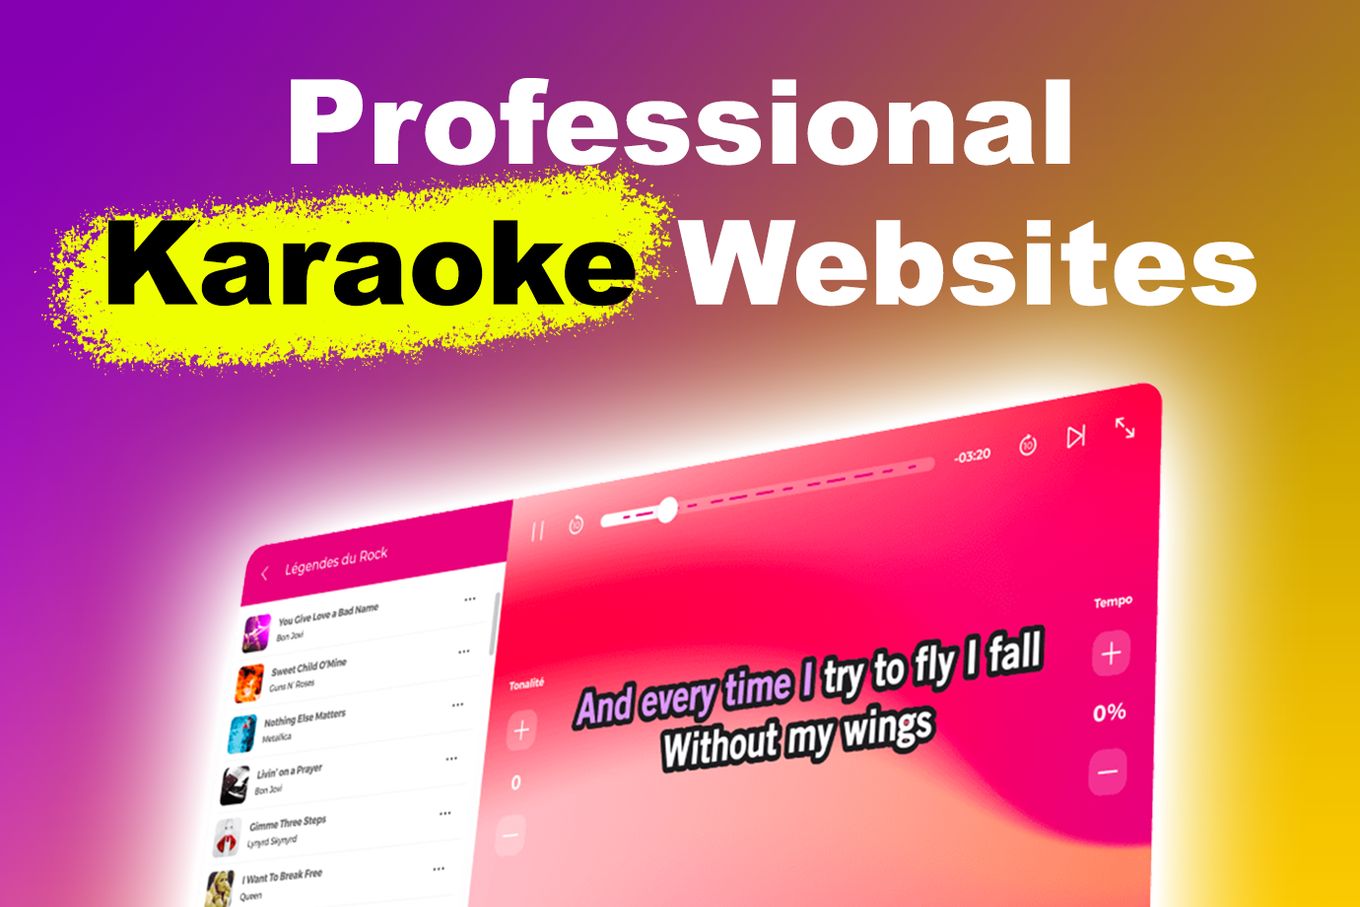 Professional Karaoke Websites